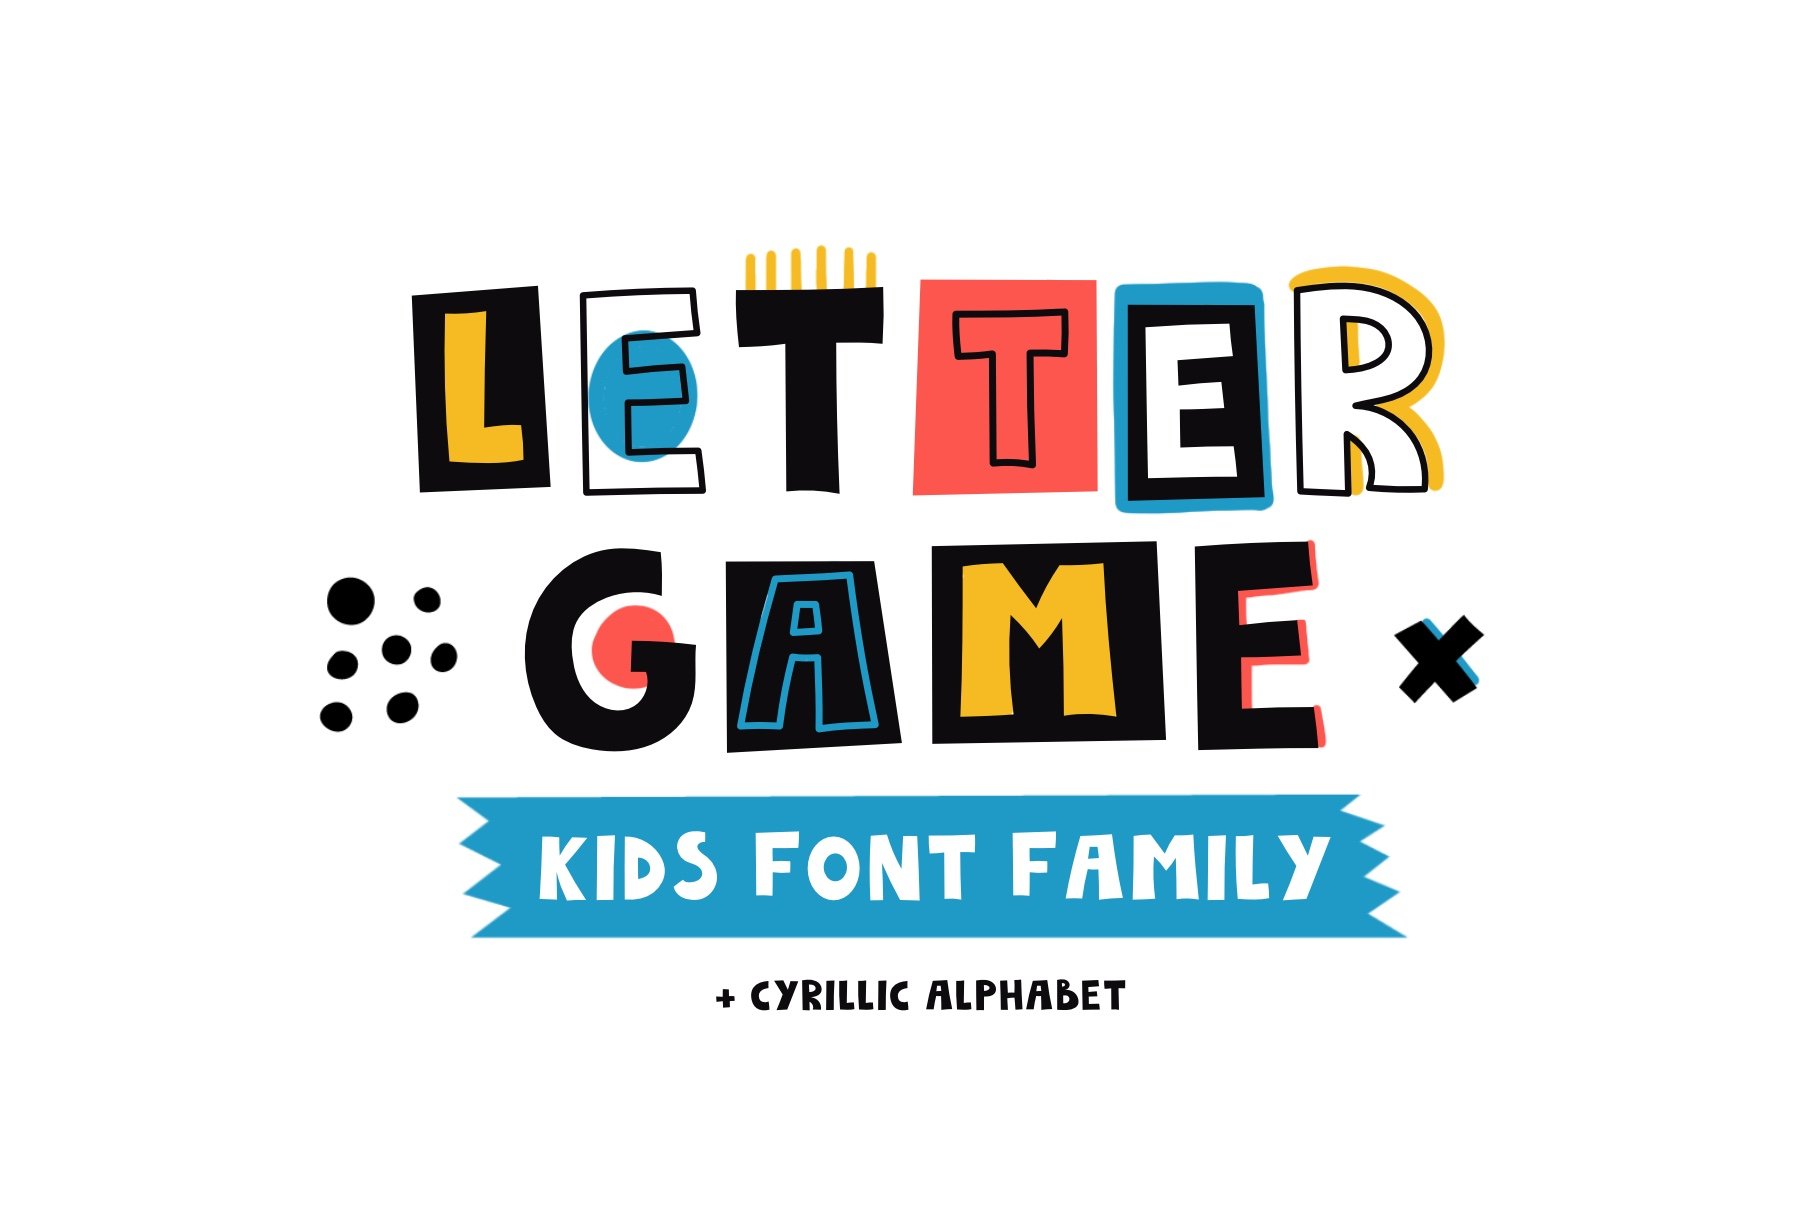 LetterGame - Kids font family cover image.